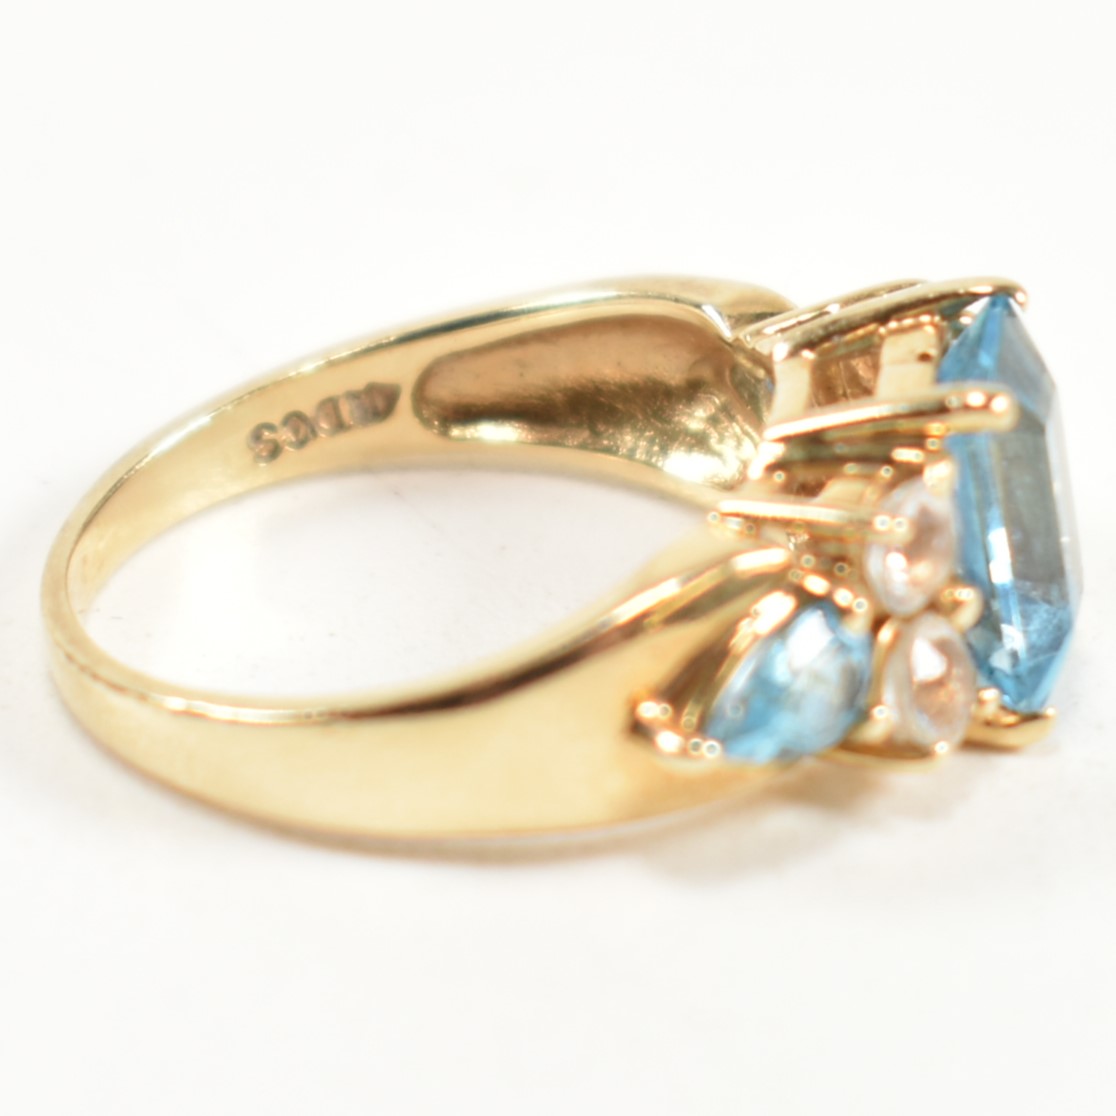 HALLMARKED 9CT GOLD & BLUE & WHITE TOPAZ RING - Image 4 of 8